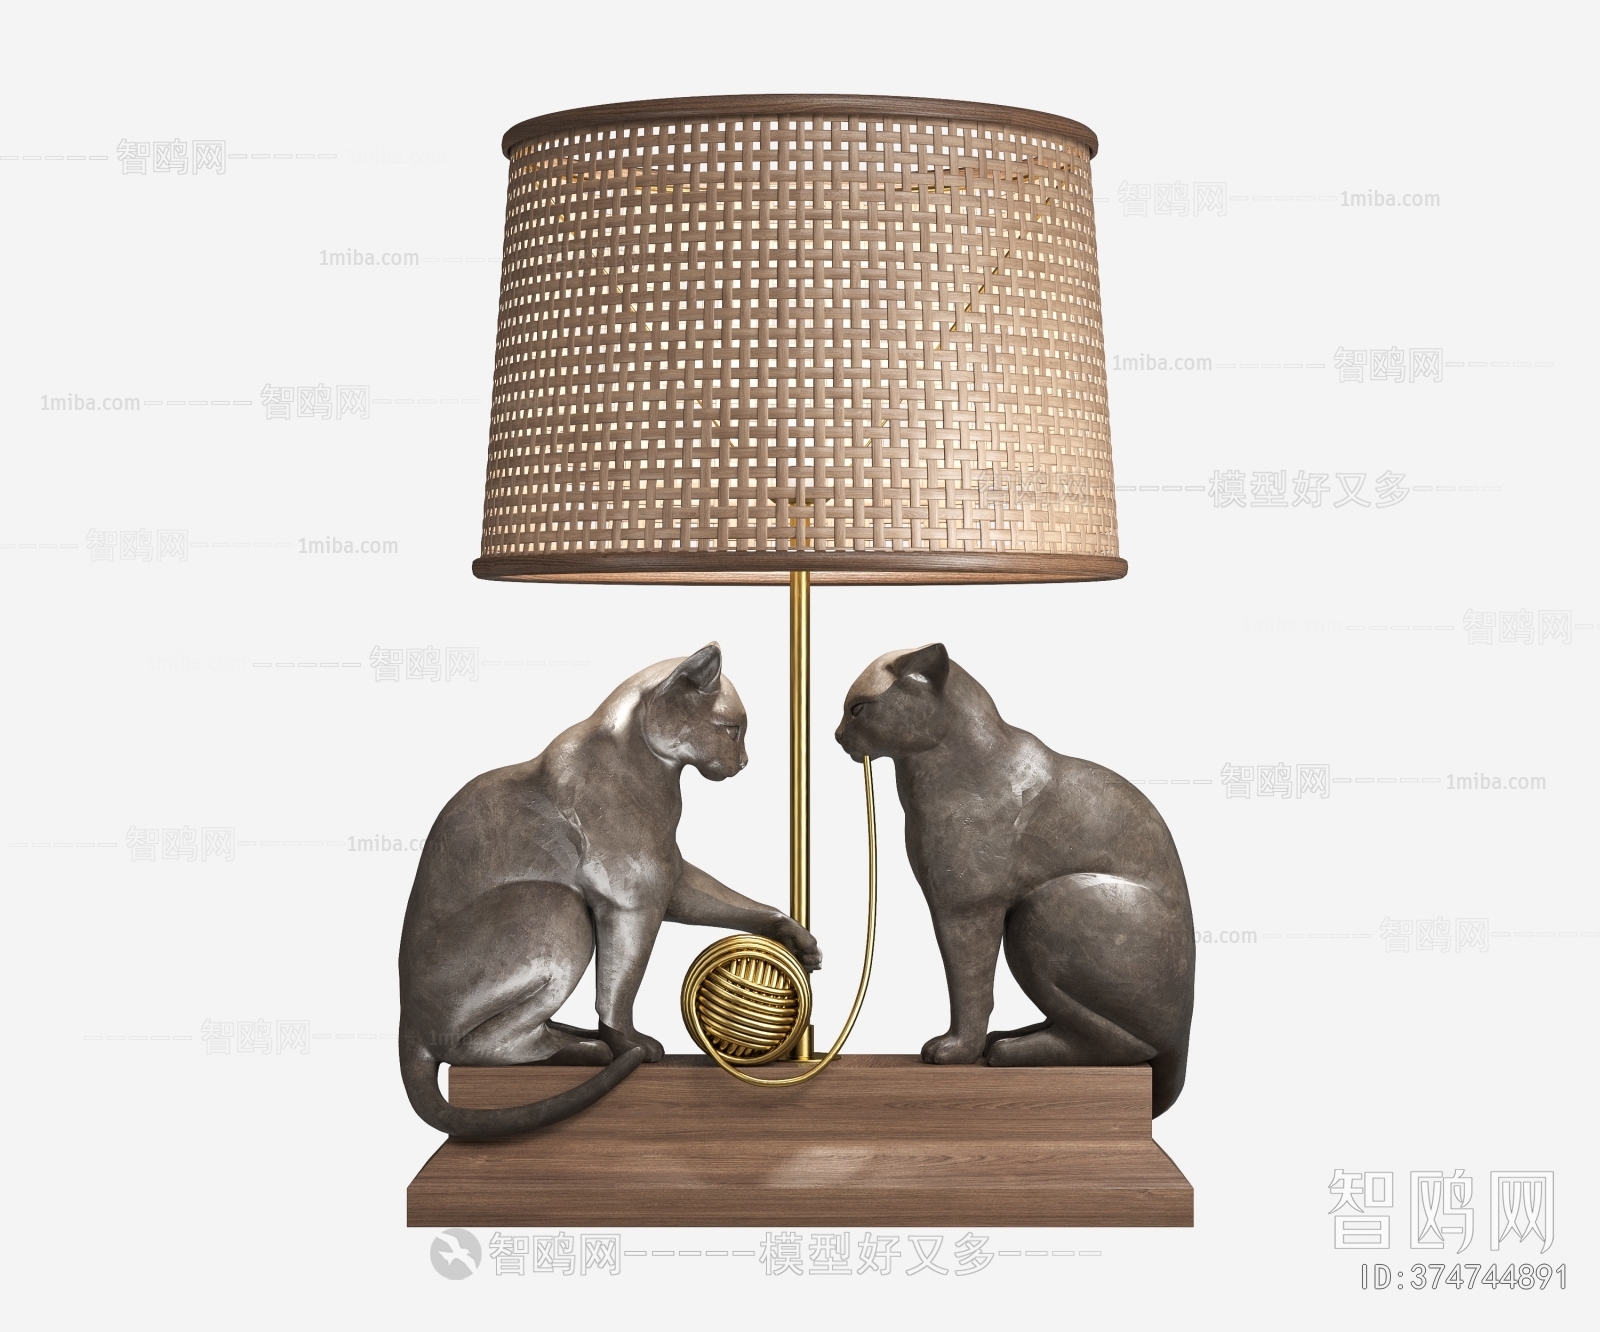 Wabi-sabi Style Table Lamp